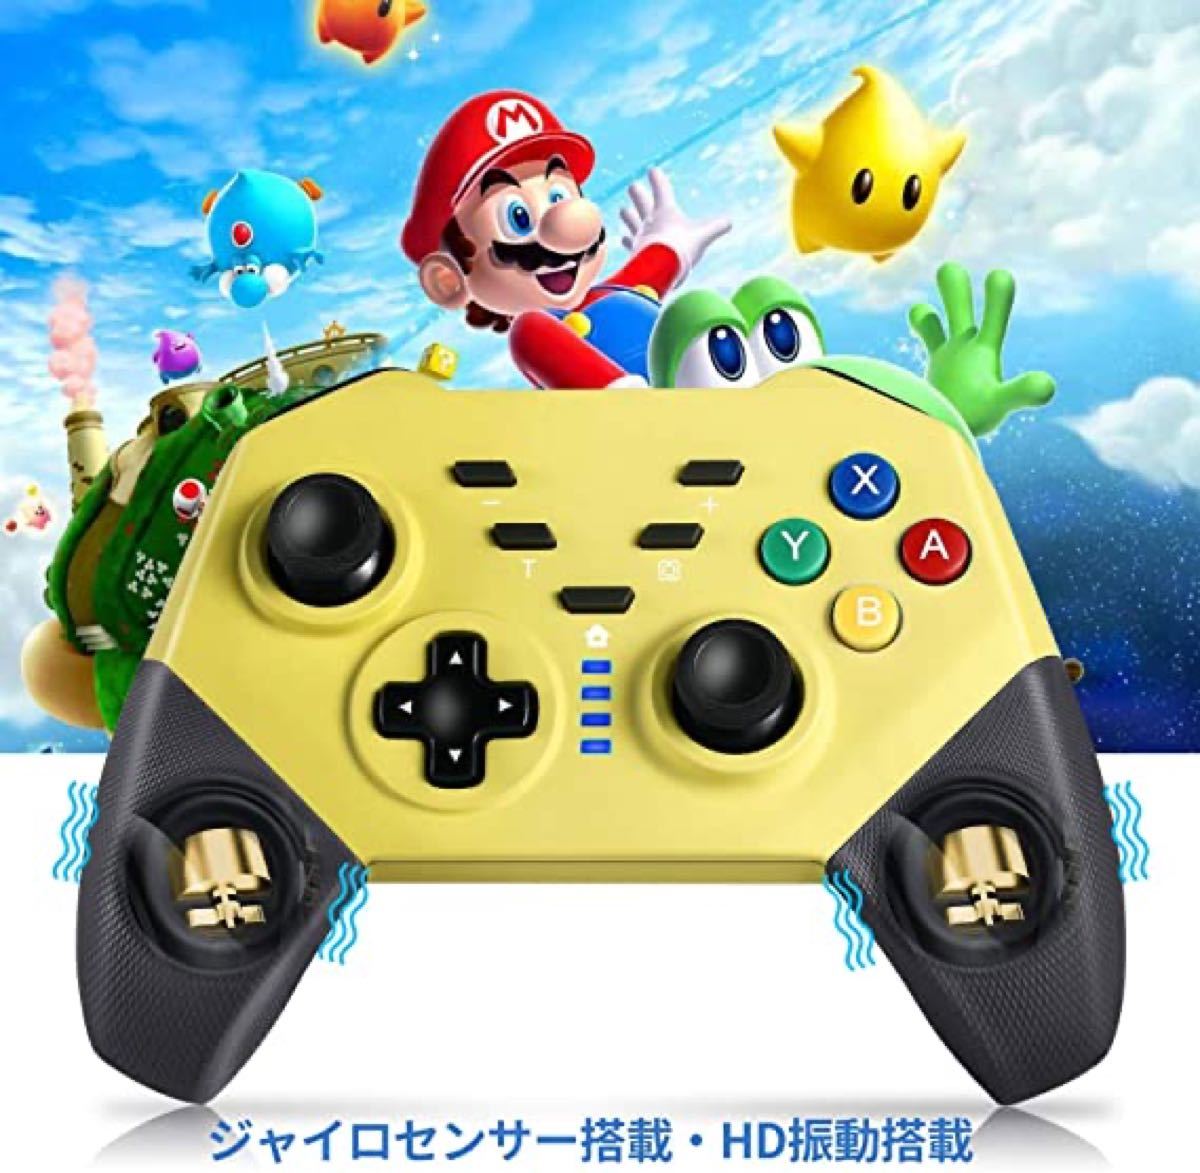 Nintendo Switch コントローラー ワイヤレス 任天堂 スイッチ